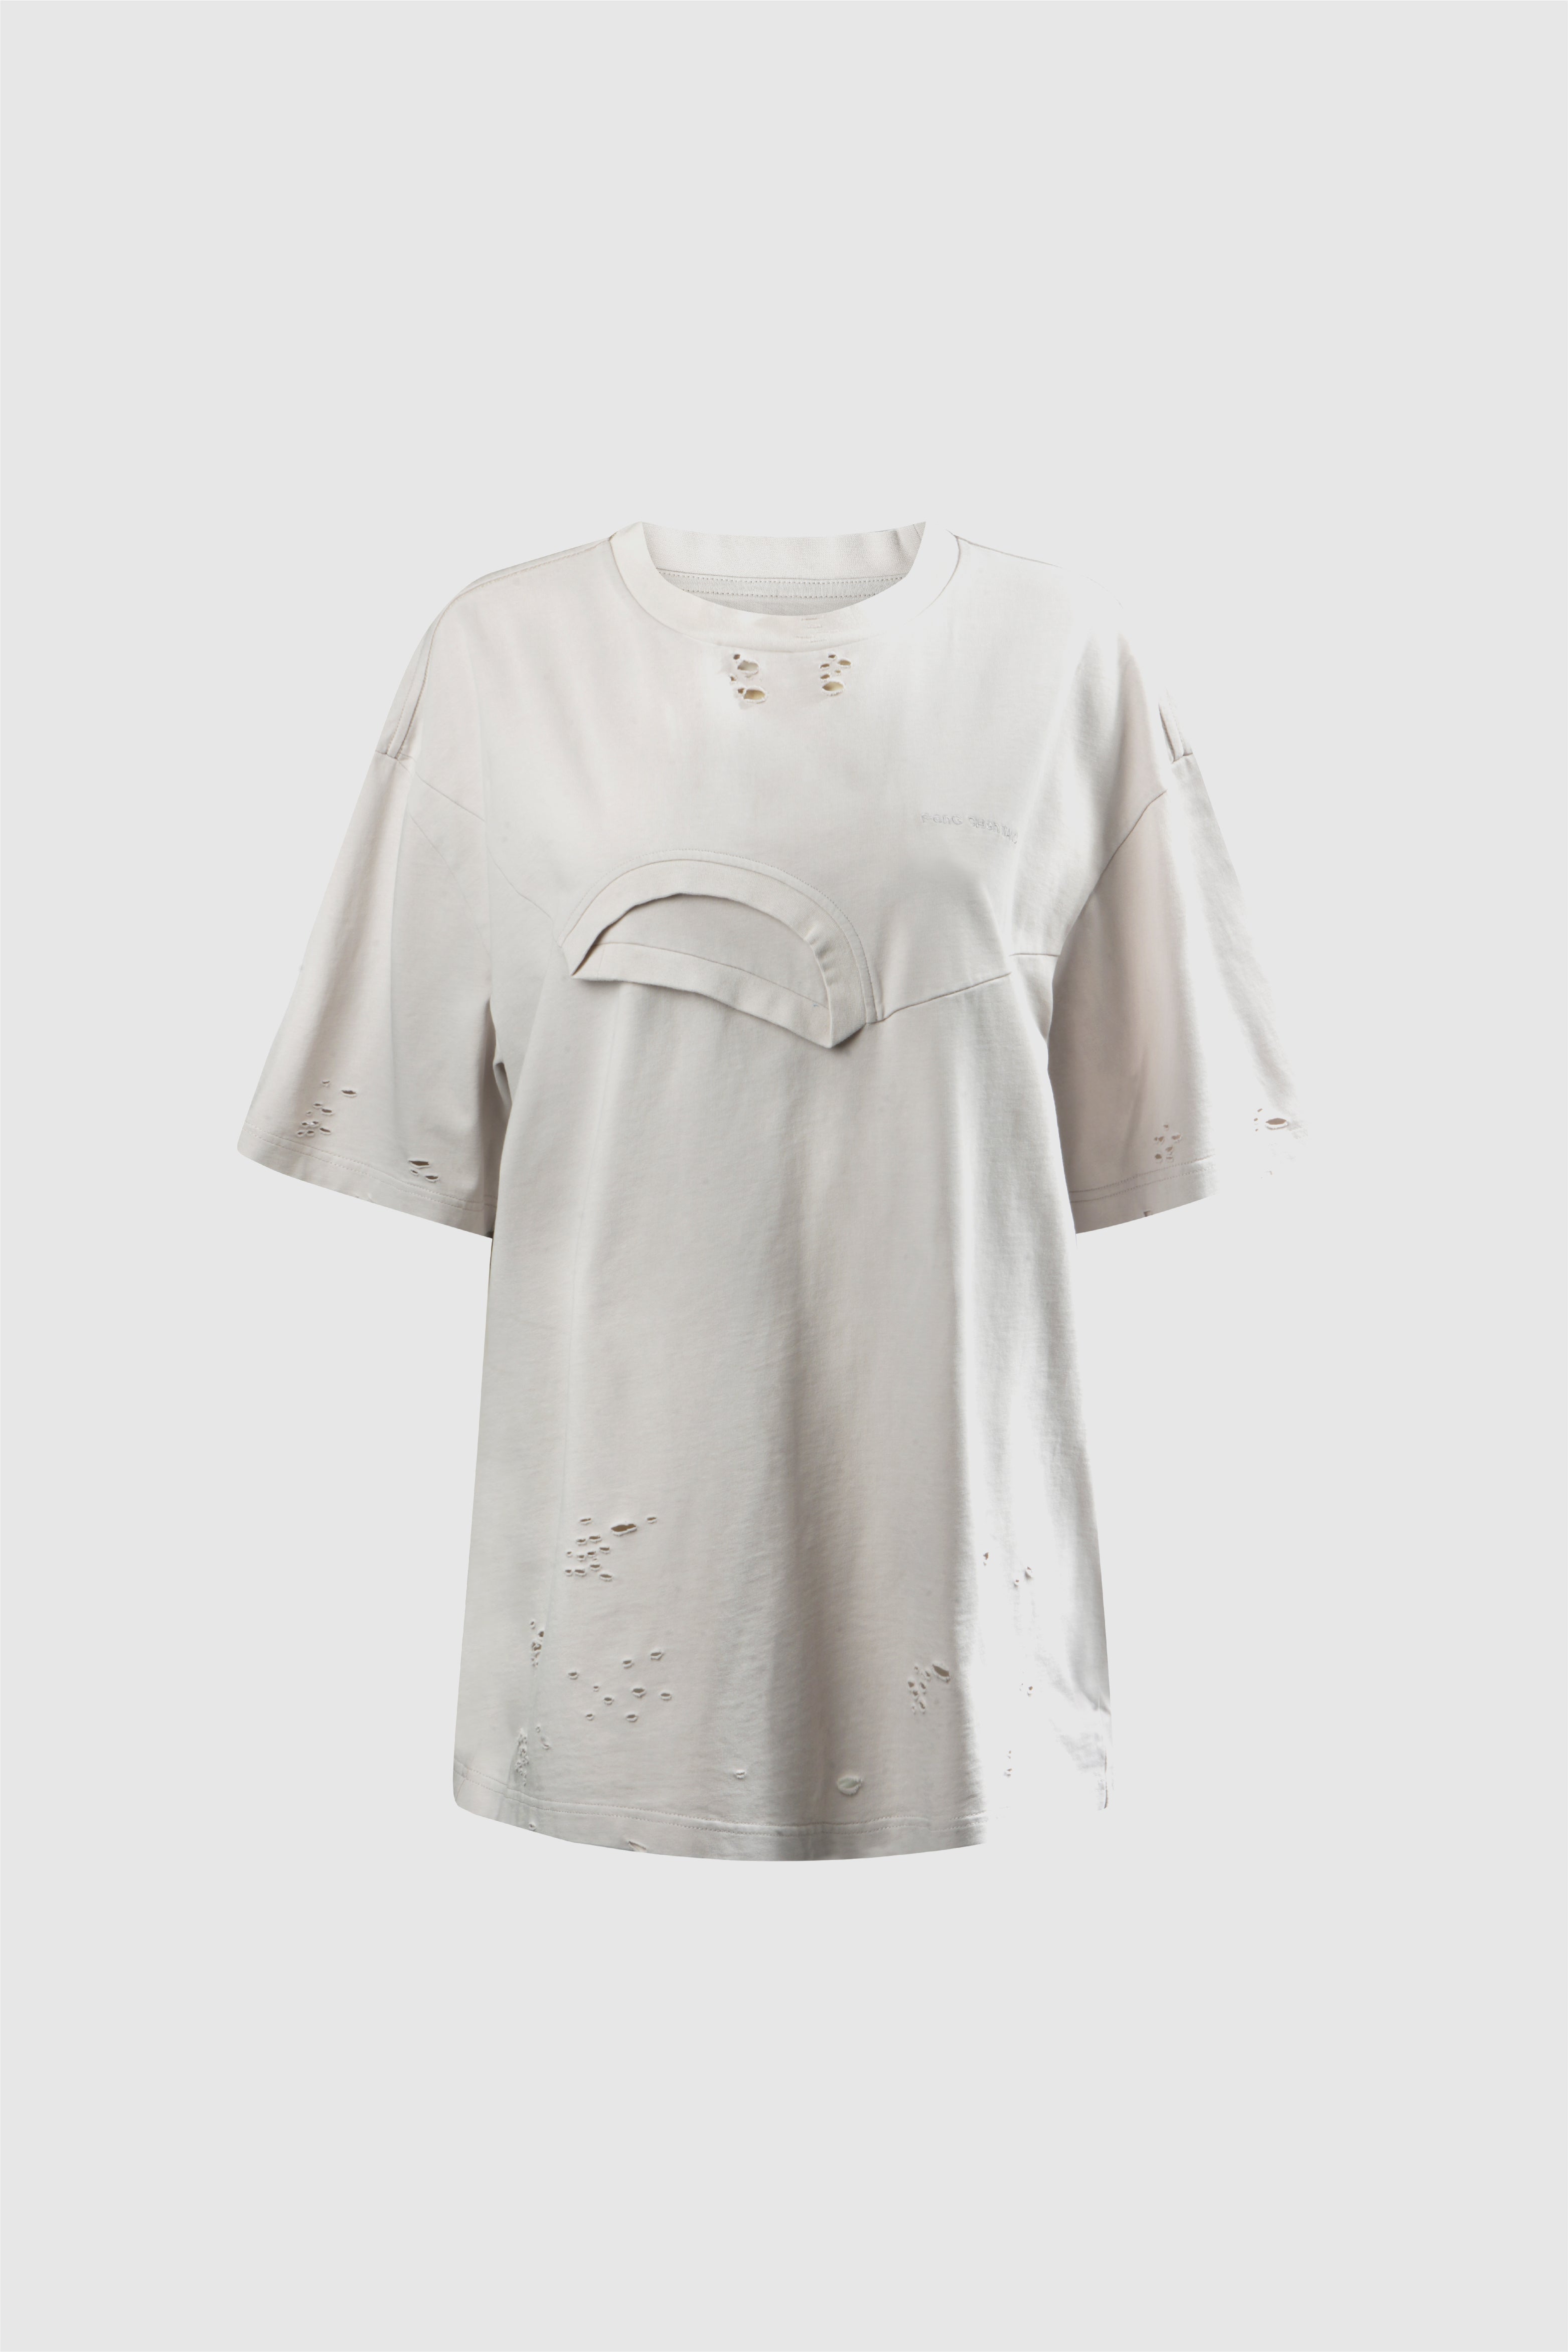 Selectshop FRAME - FENG CHEN WANG Distressed T-Shirt T-Shirts Concept Store Dubai